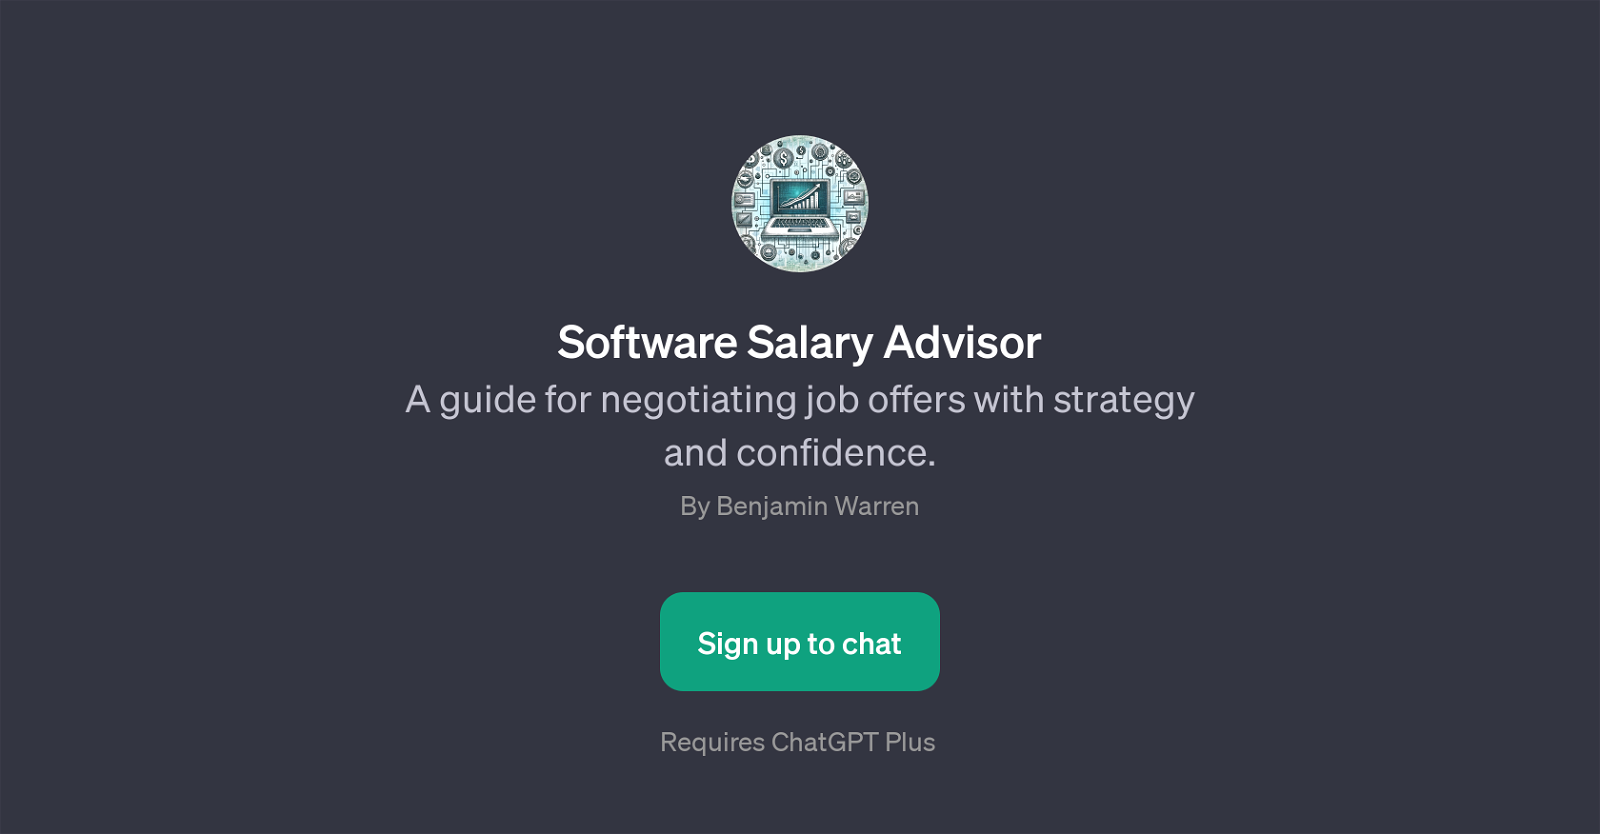 Software Salary Advisor website